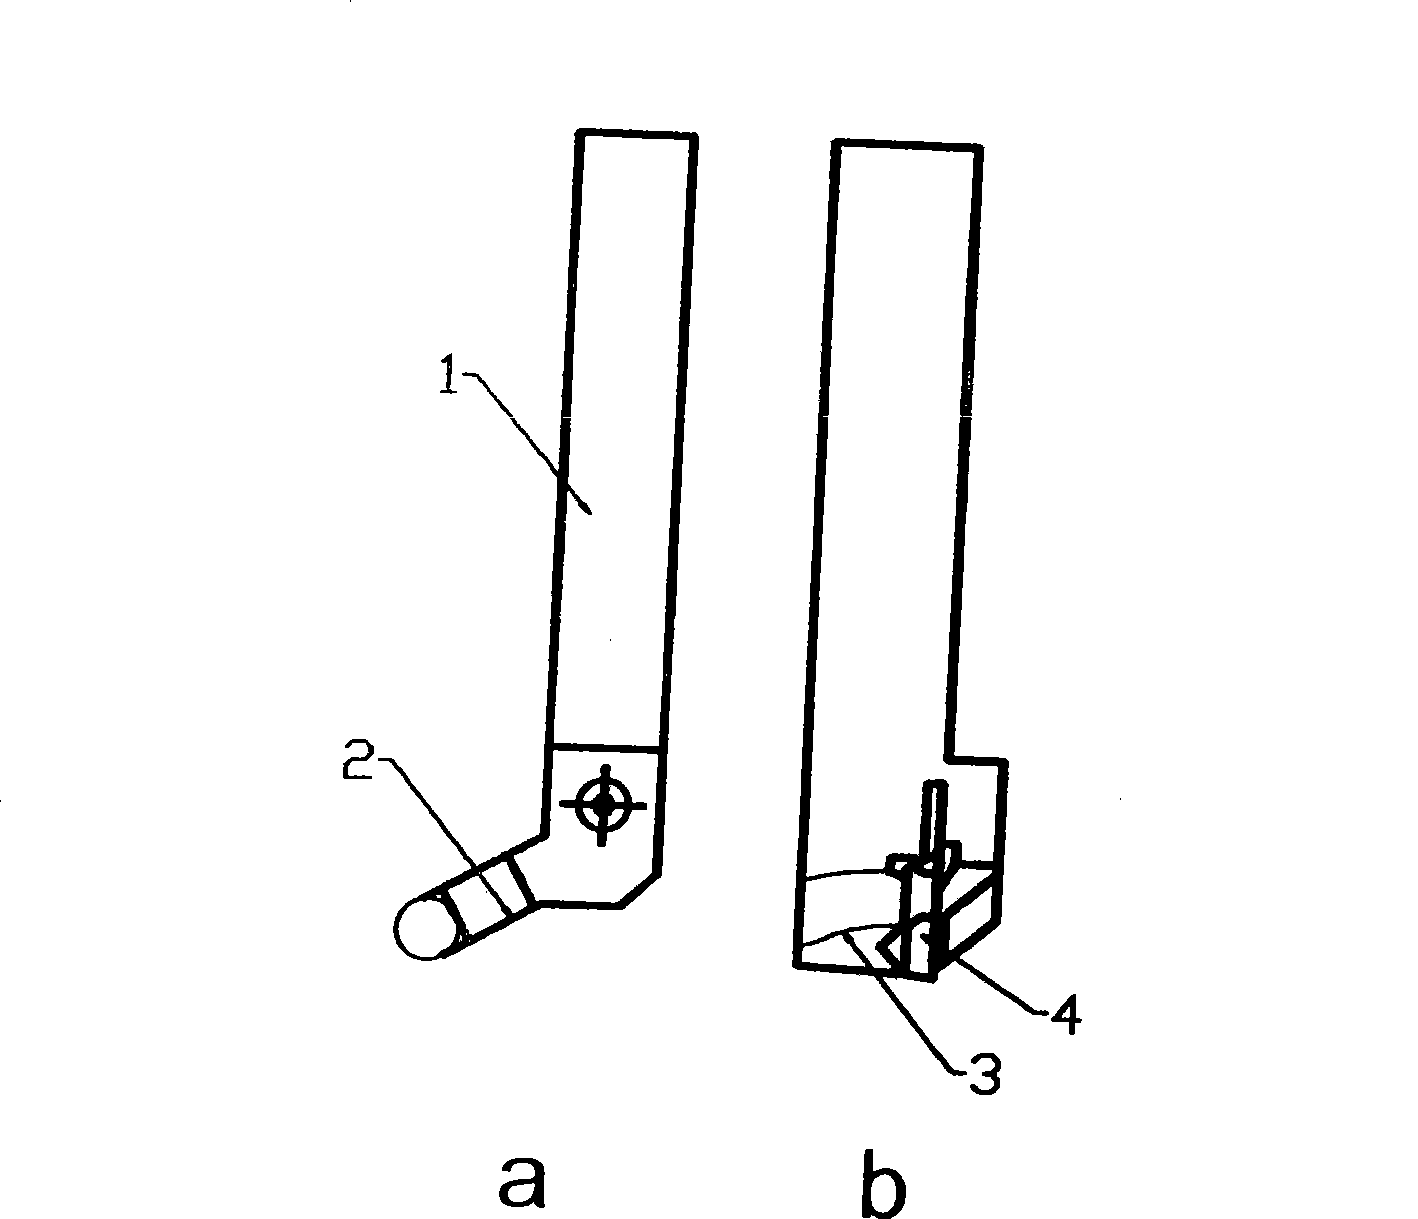 Tool and method for processing half-speed machine crankshaft